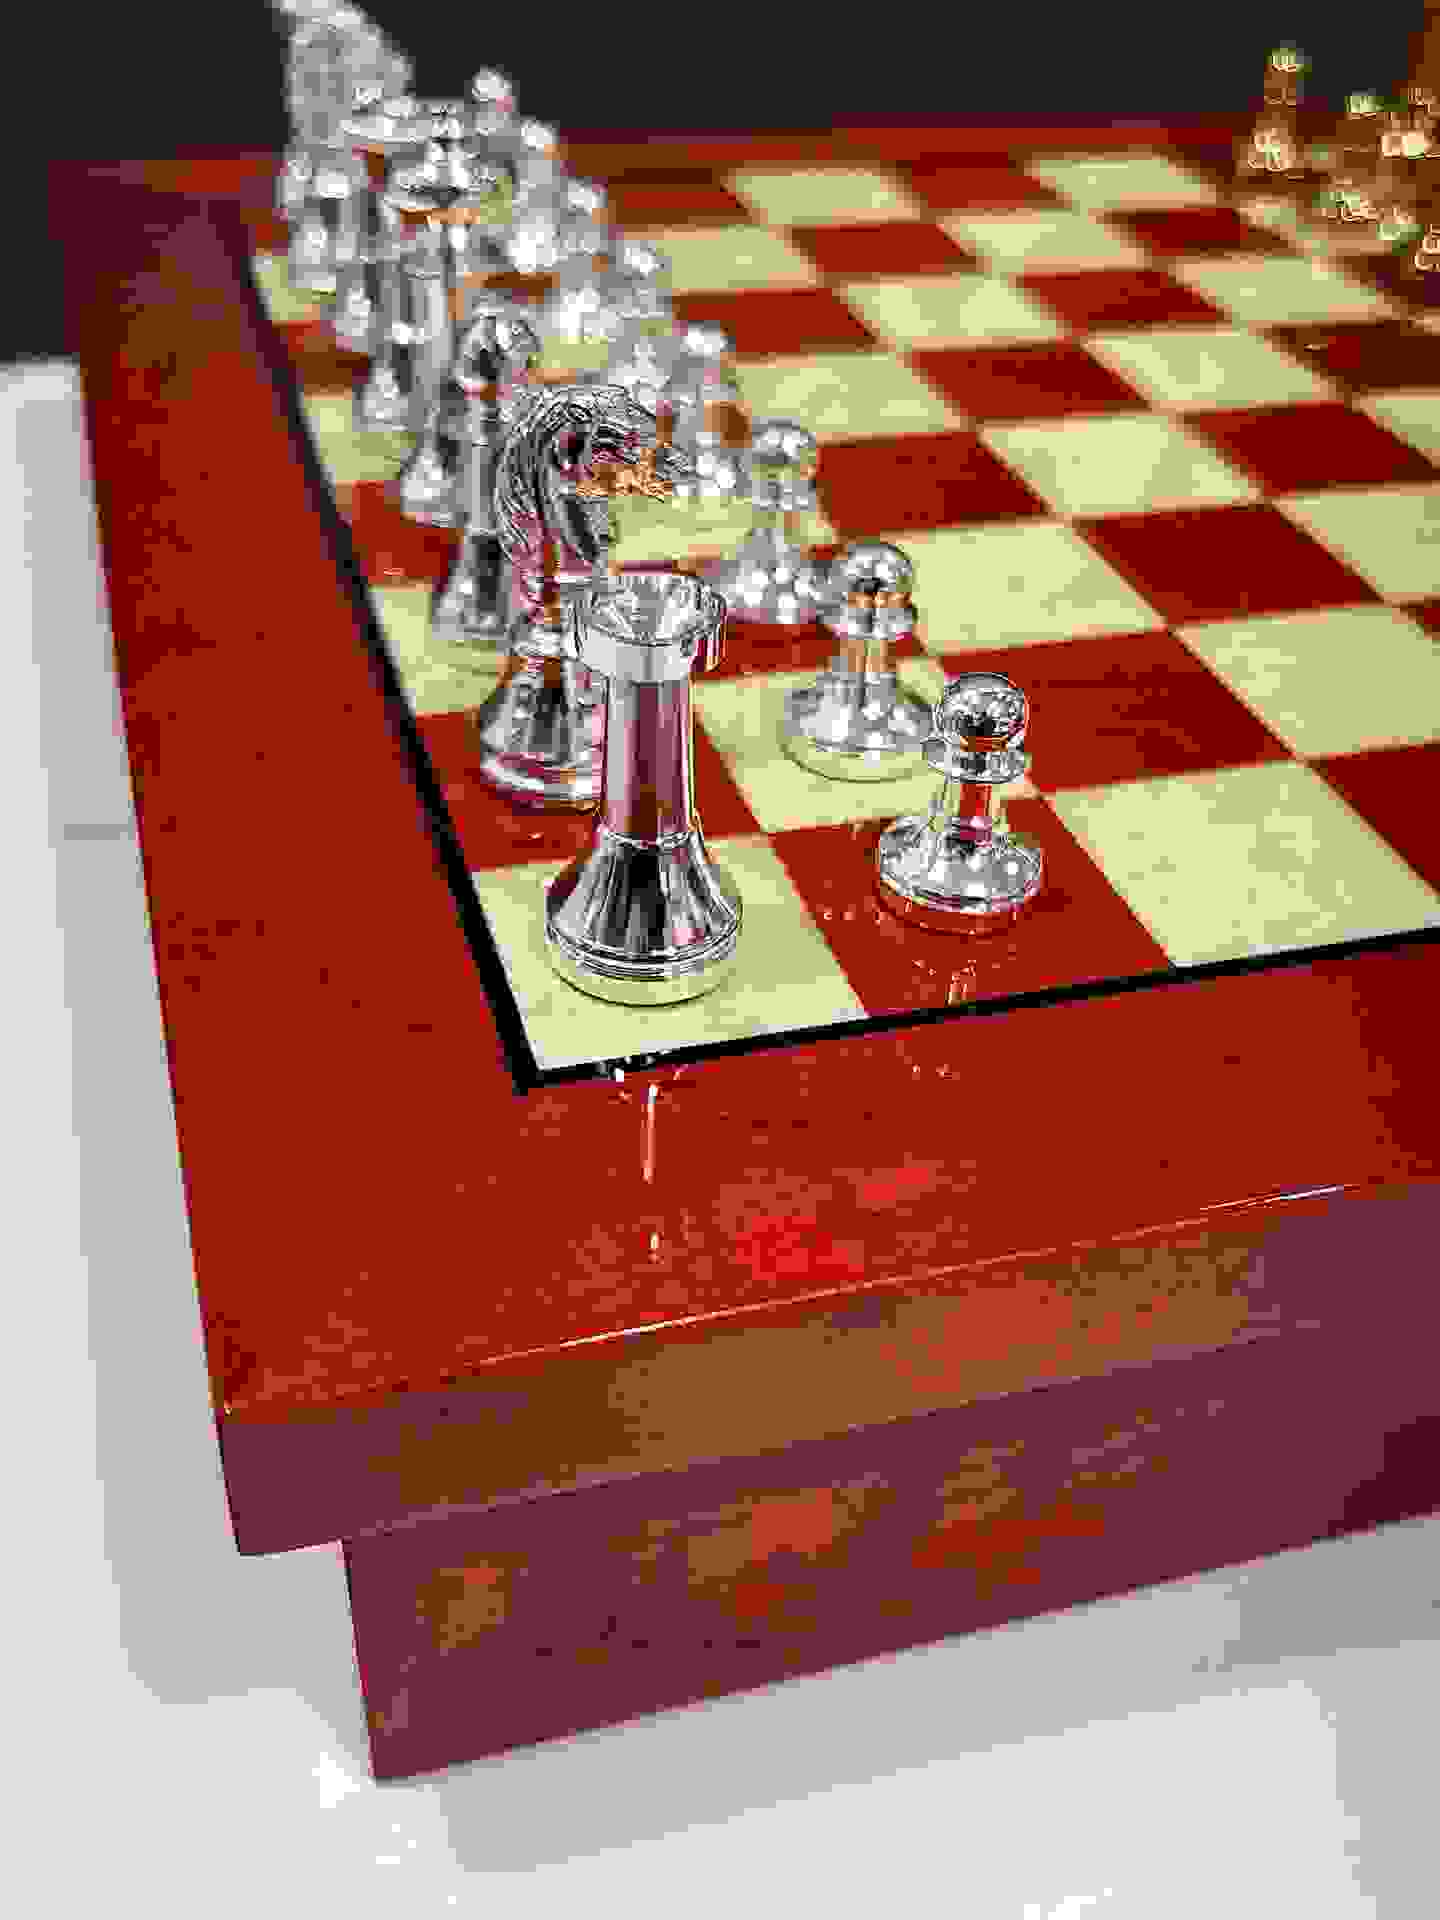 Italfama Chess Set Red/Off White Briar Wood 9538R + 96GS